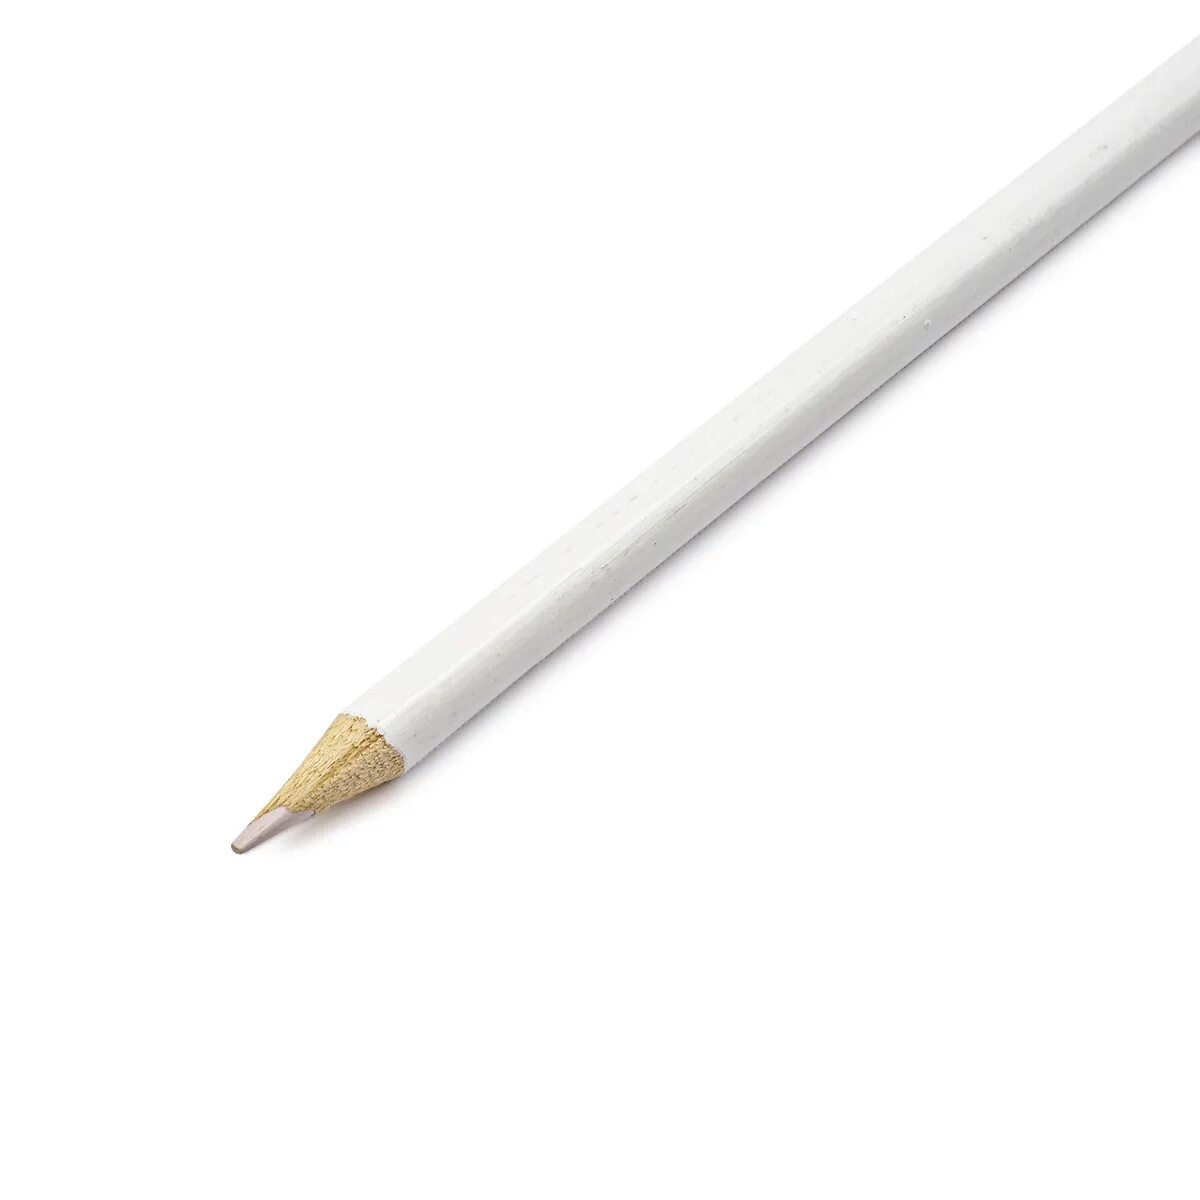 410101 Карандаш маркировочный смывающийся БС. Белый карандаш. Карандаш белого цвета. Карандаш с белым грифелем.